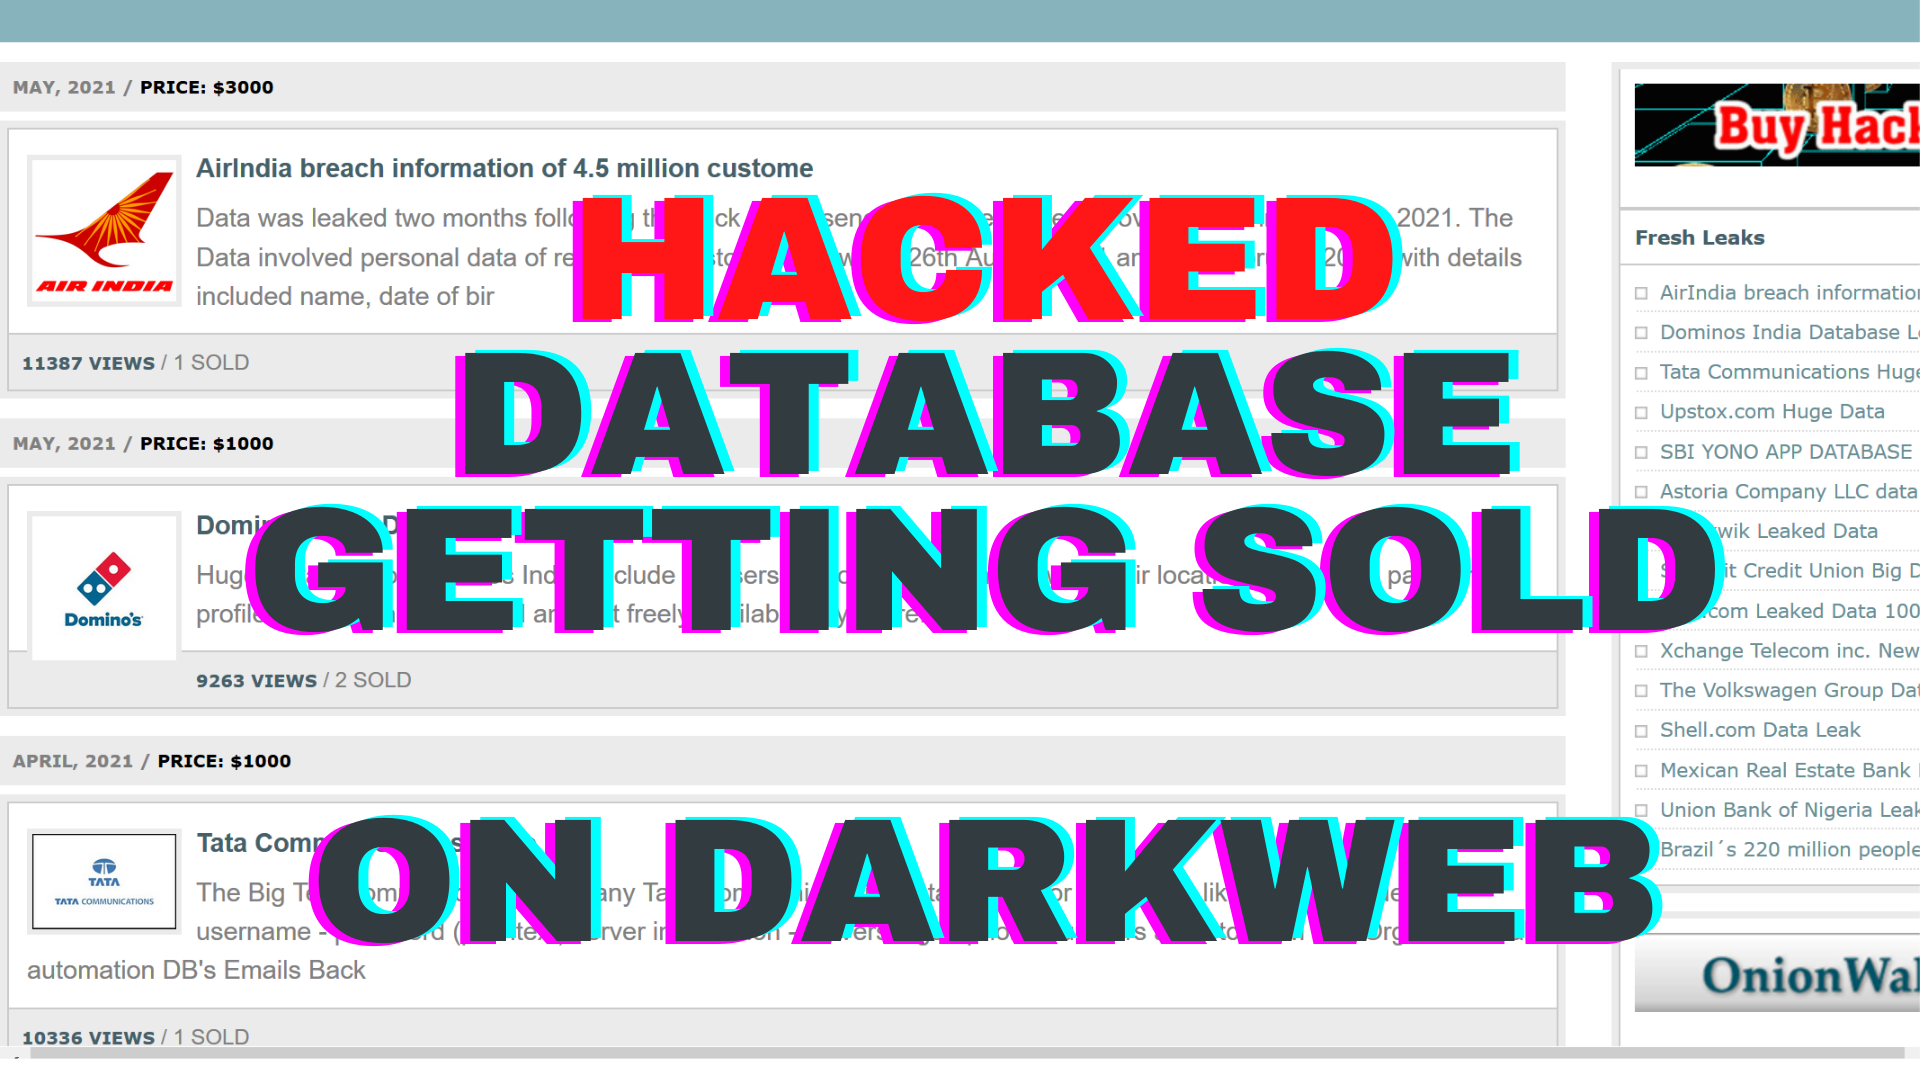 Database Getting Sold on Darkweb